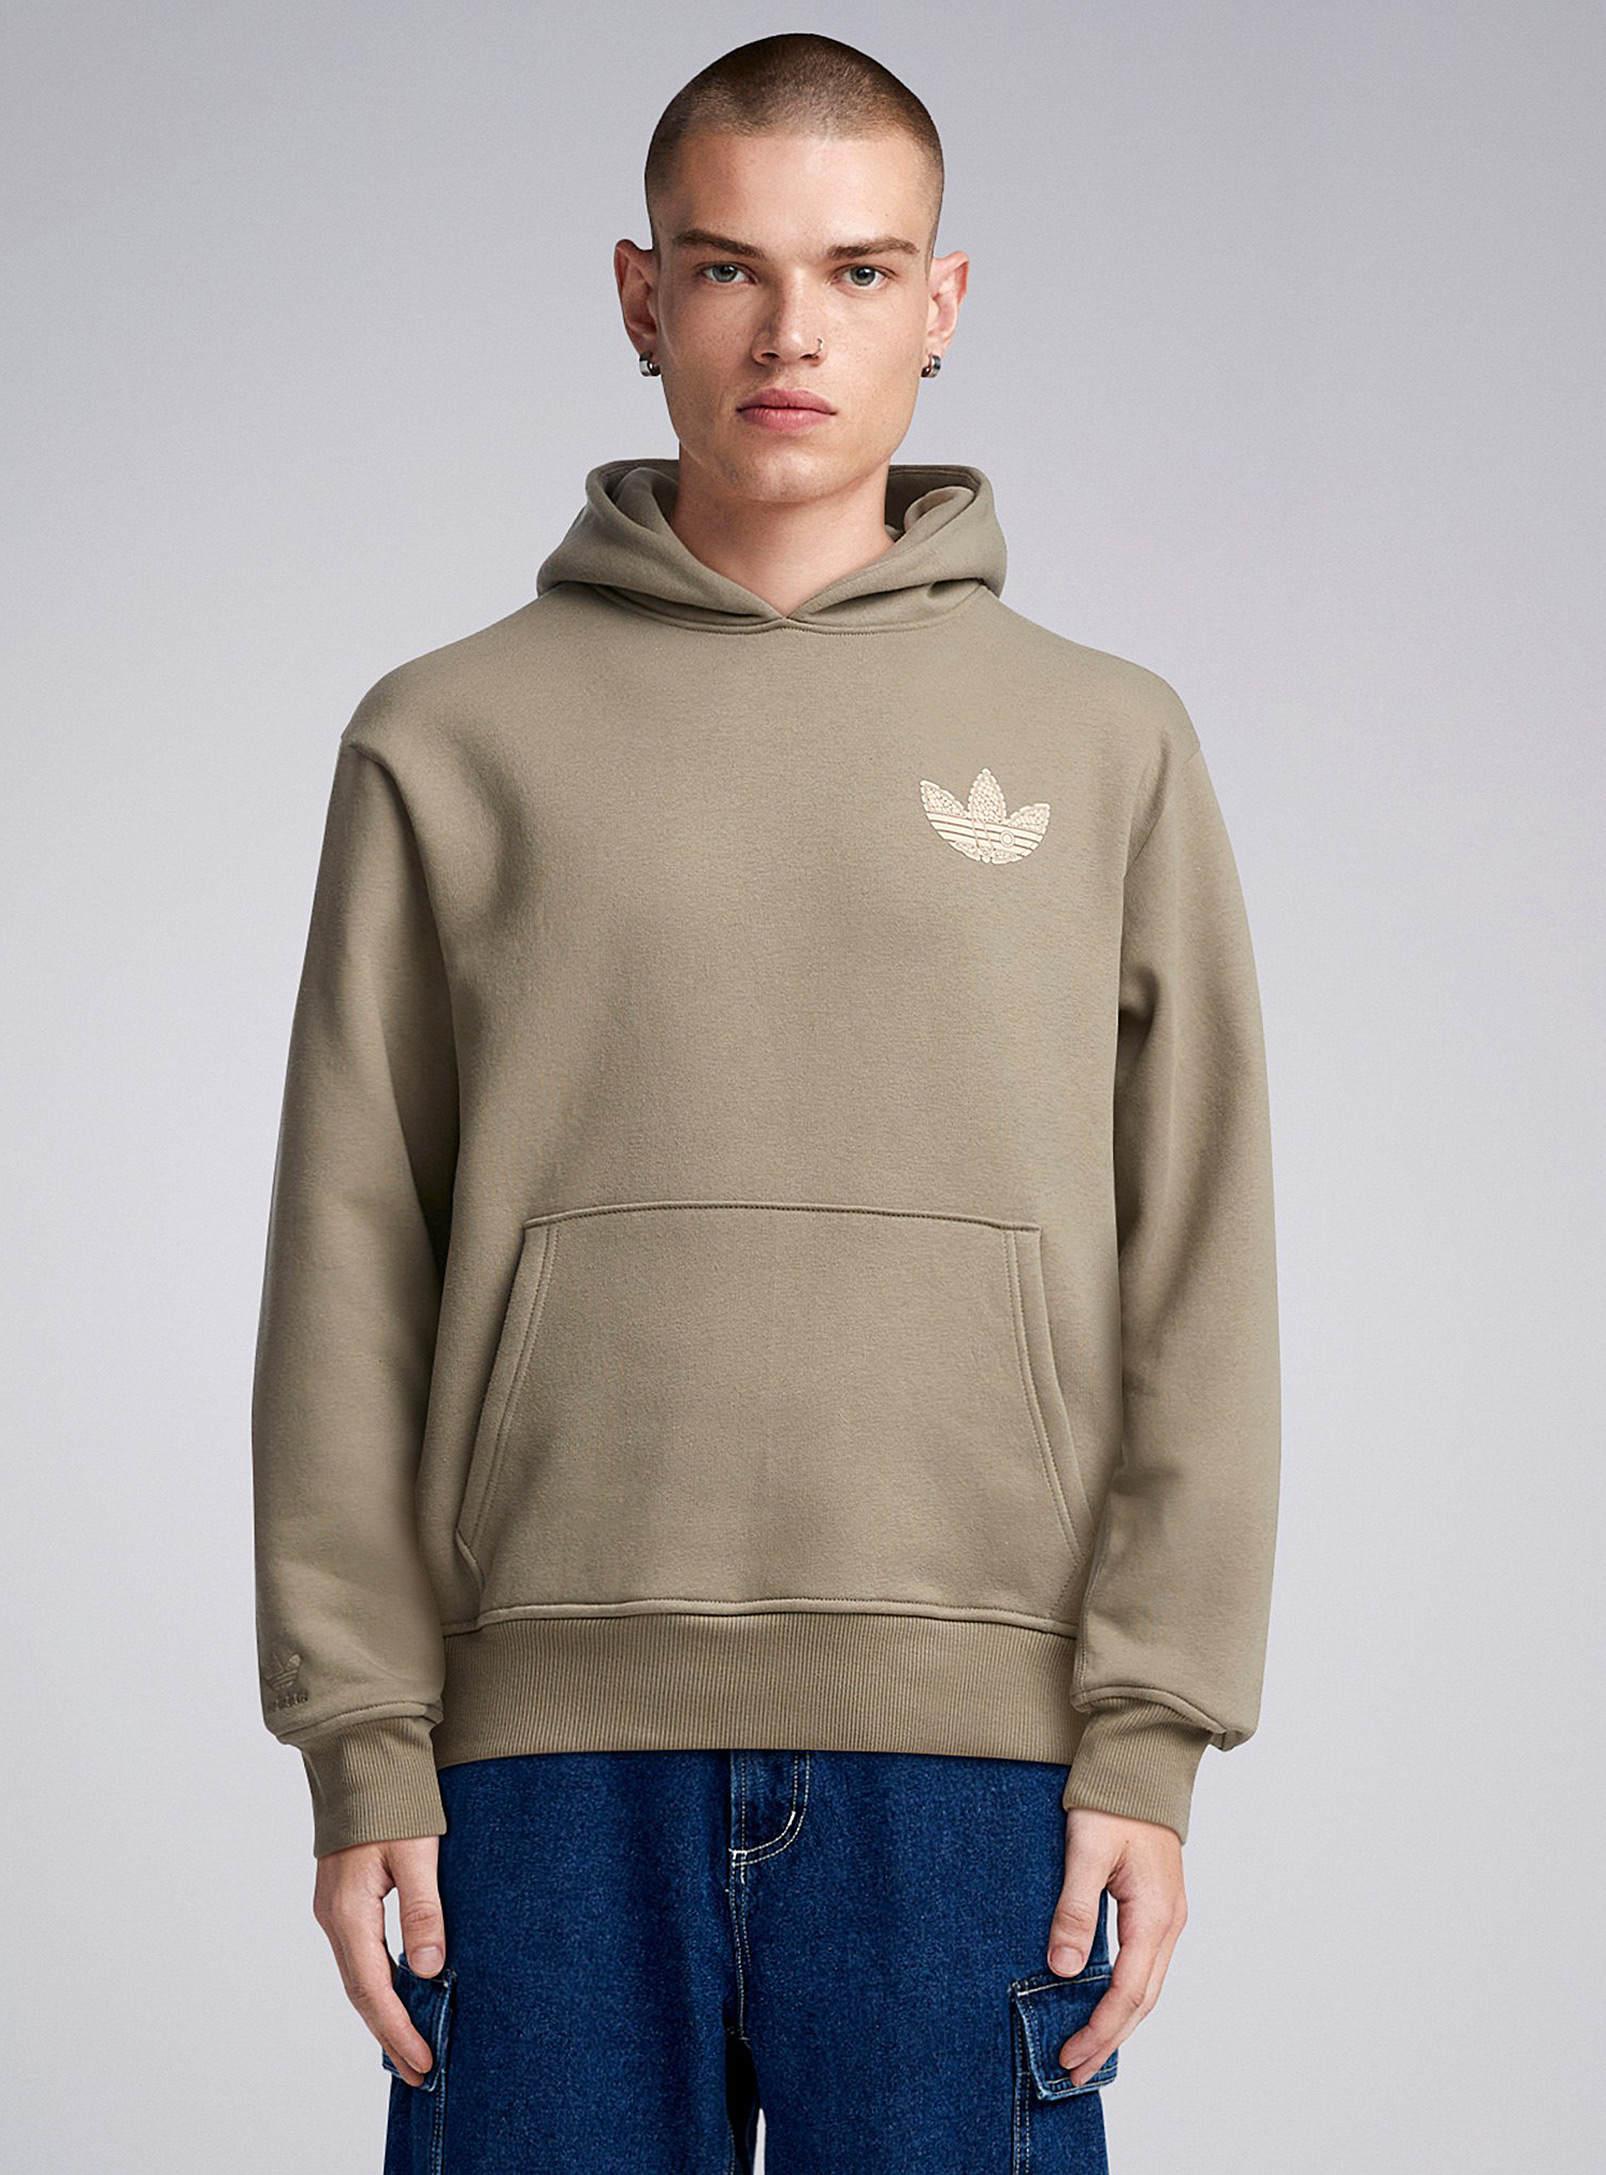 Adidas - Men's Graphic Trefoil logo hoodie